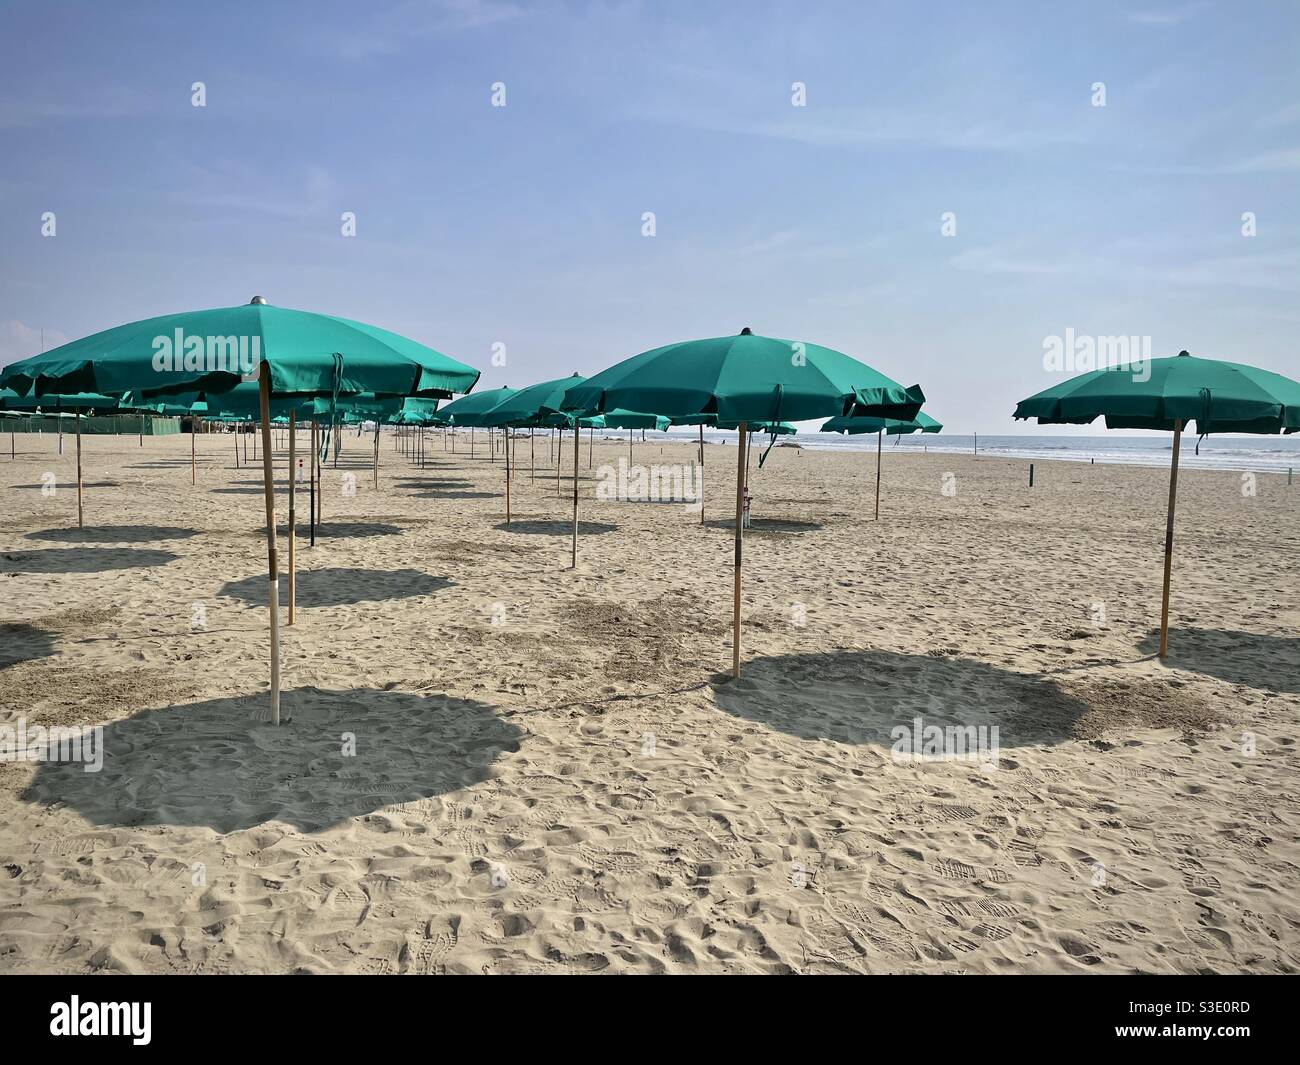 Umbrellas parasols on the beach in Forte dei marmi Italy Stock Photo